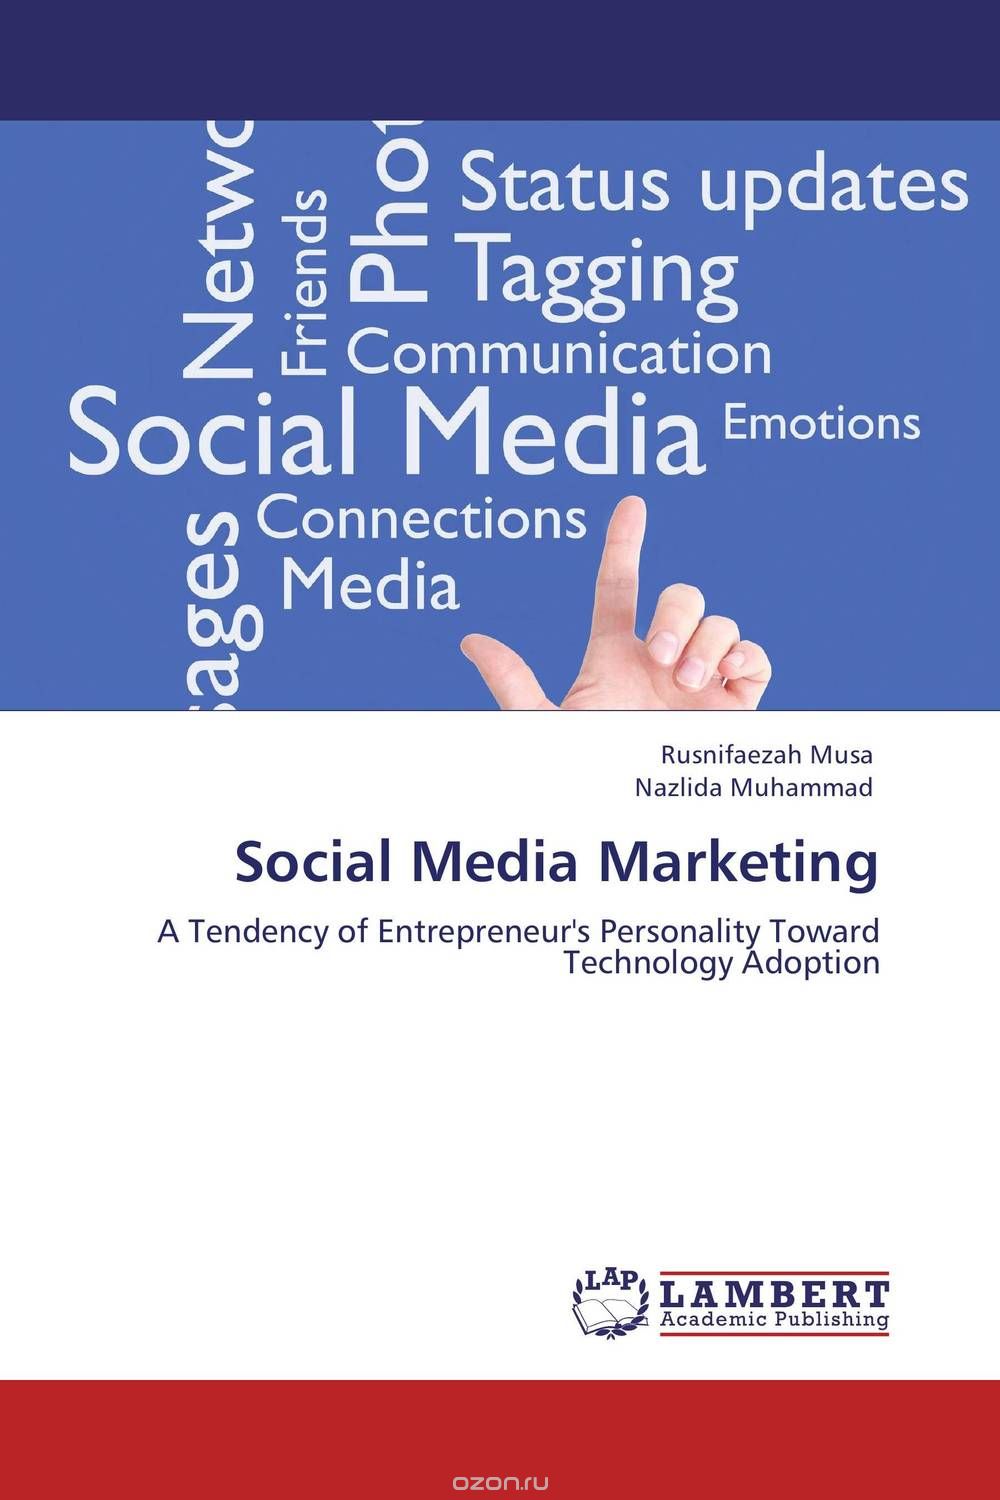 Скачать книгу "Social Media Marketing"